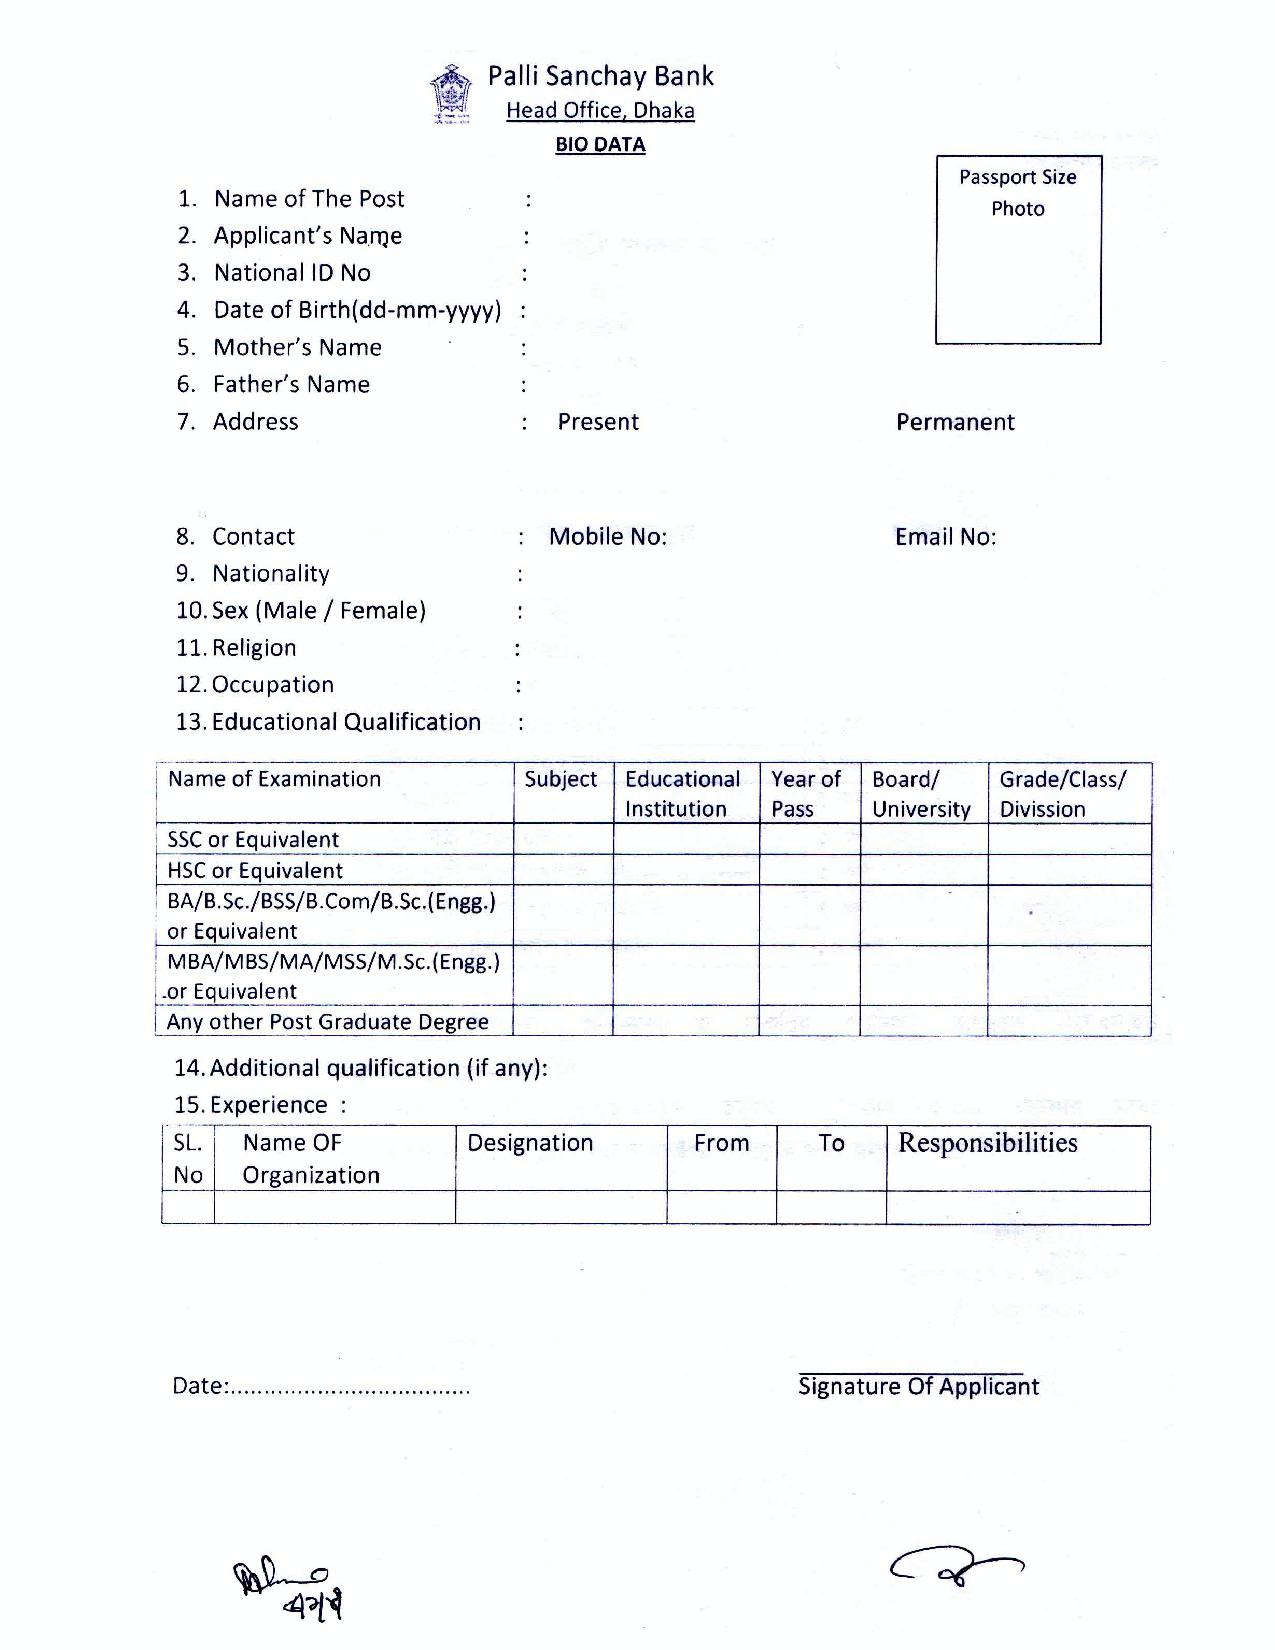 palli sanchay bank application form